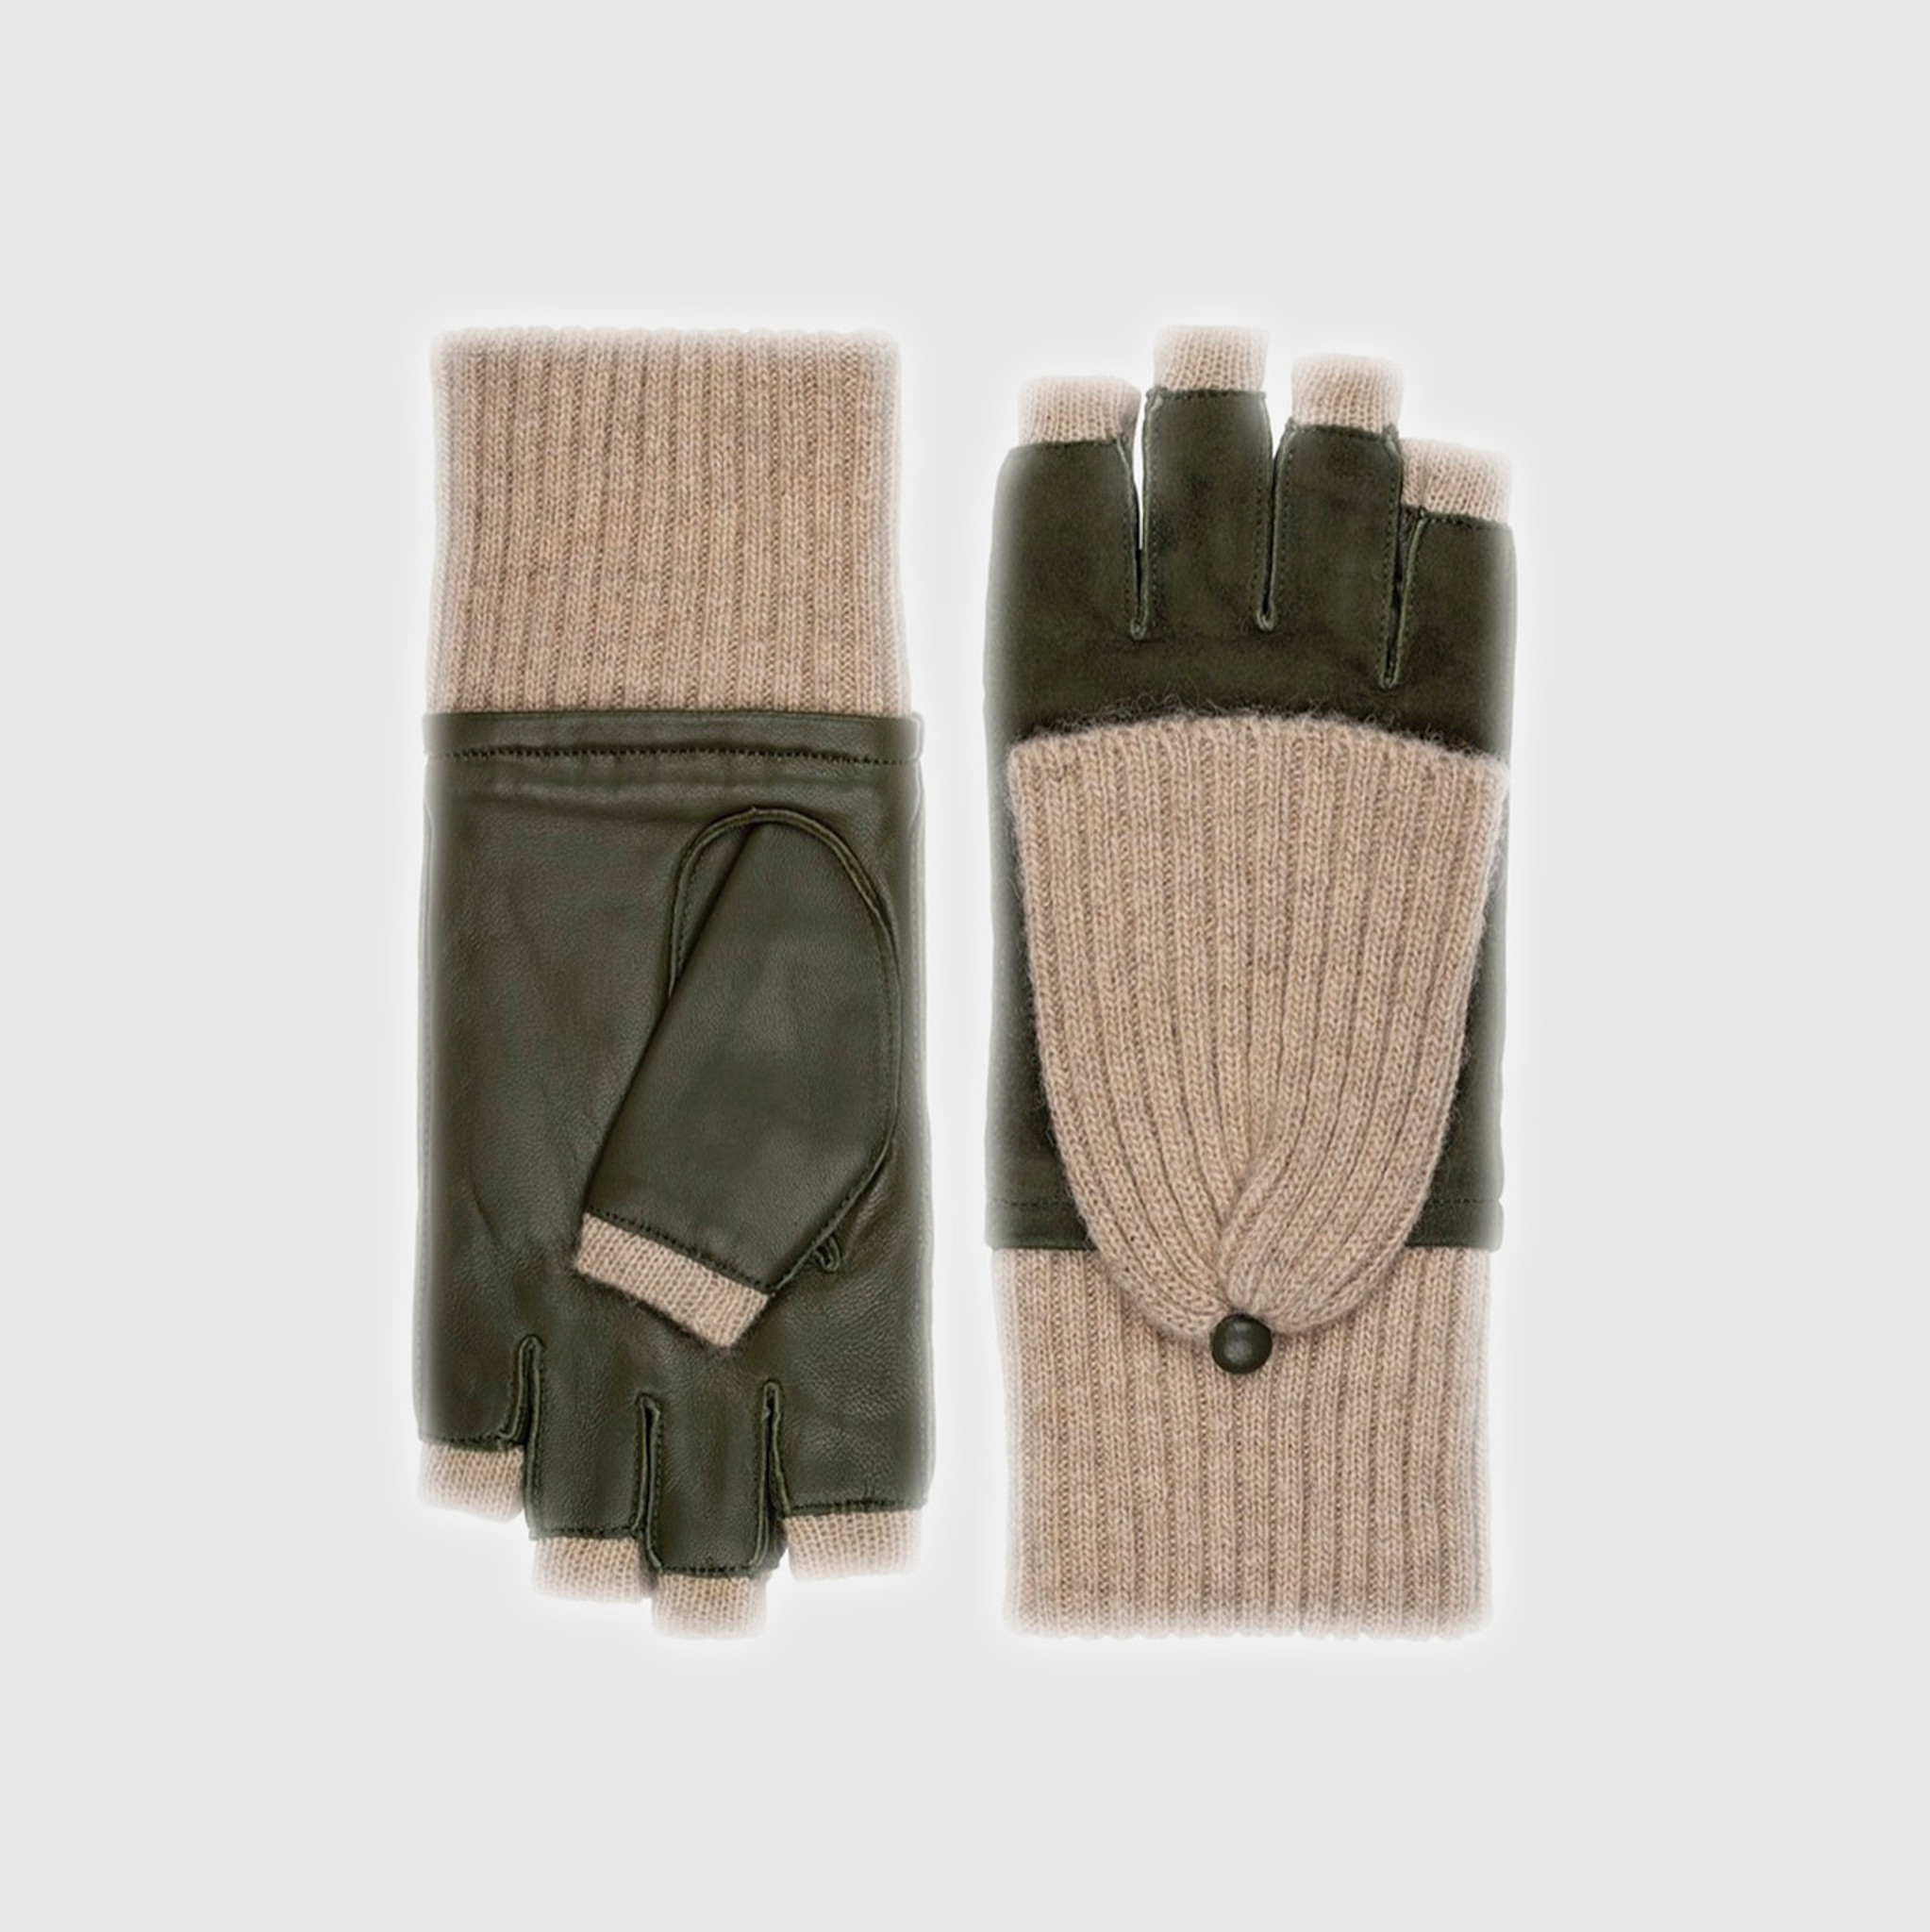 Amato, New York, Carolina Amato Suede & Leather Cashmere Pop Top, Leather Gloves, Olive Green 